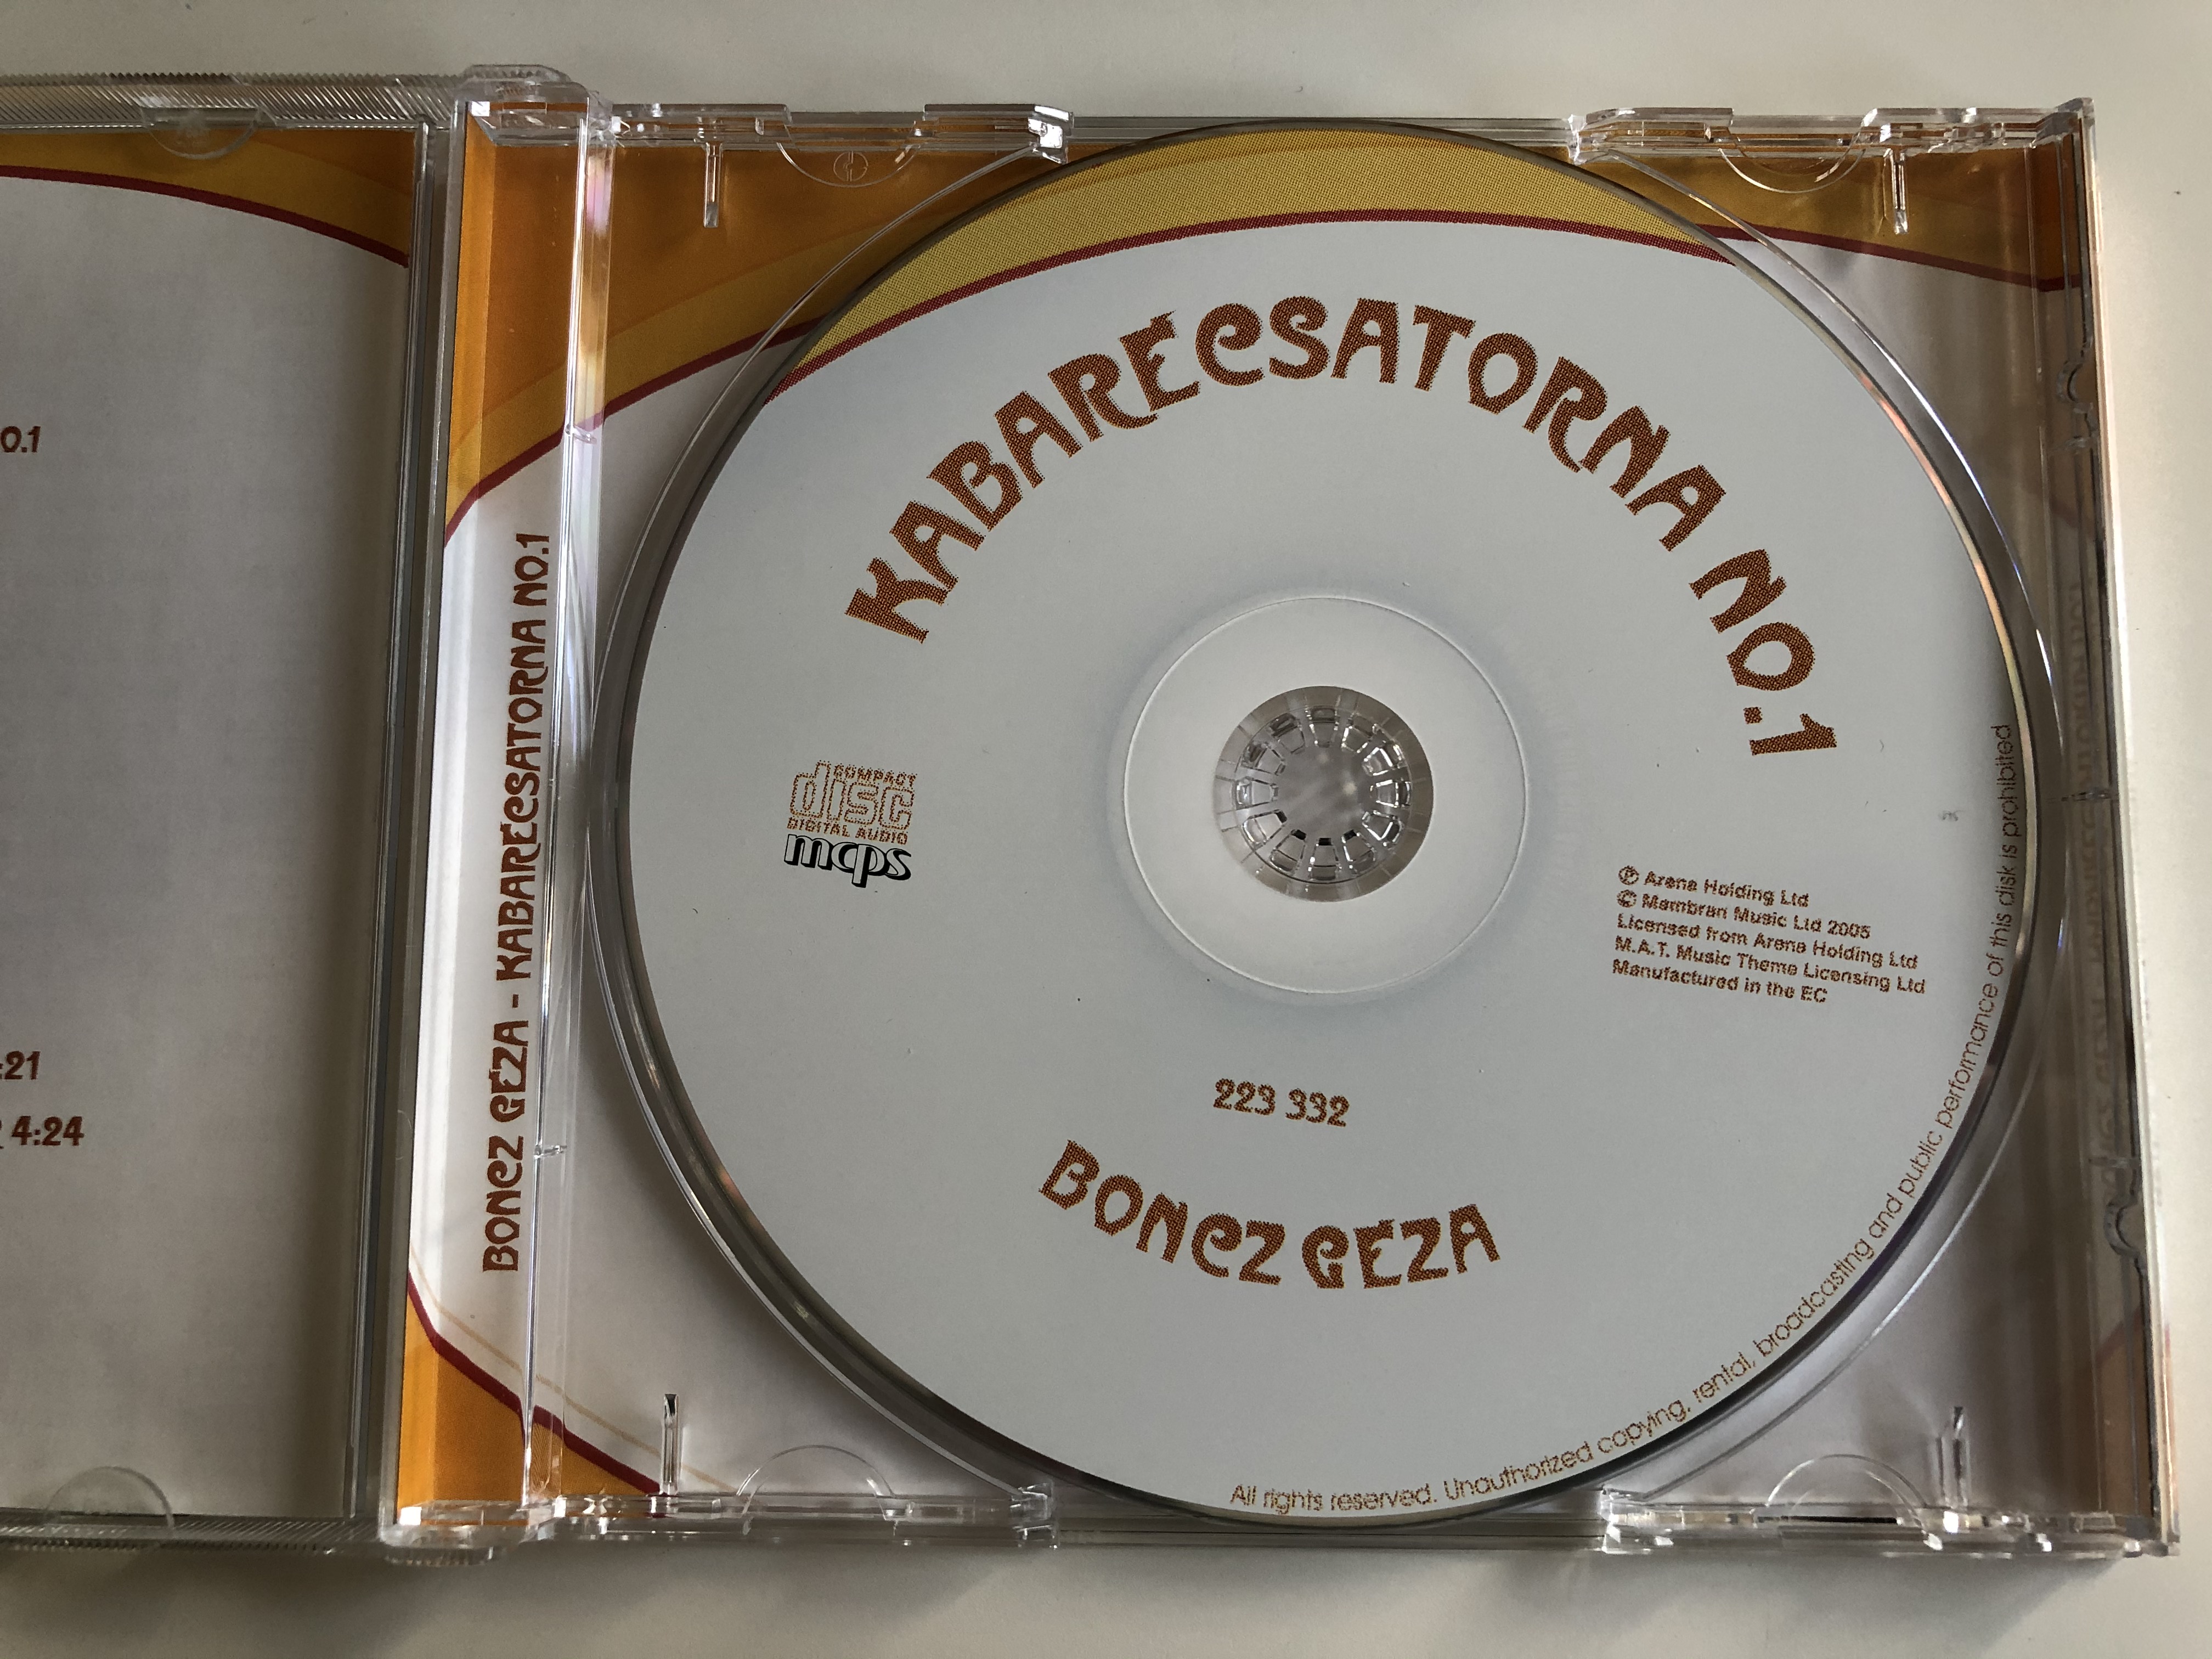 kabar-csatorna-no.-1-bones-geza-szerzoi-lemeze-kozremukodik-bodrogi-gyula-csala-zsuzsa-haumann-peter-balazs-peter-membran-music-audio-cd-2005-223-332-3-.jpg